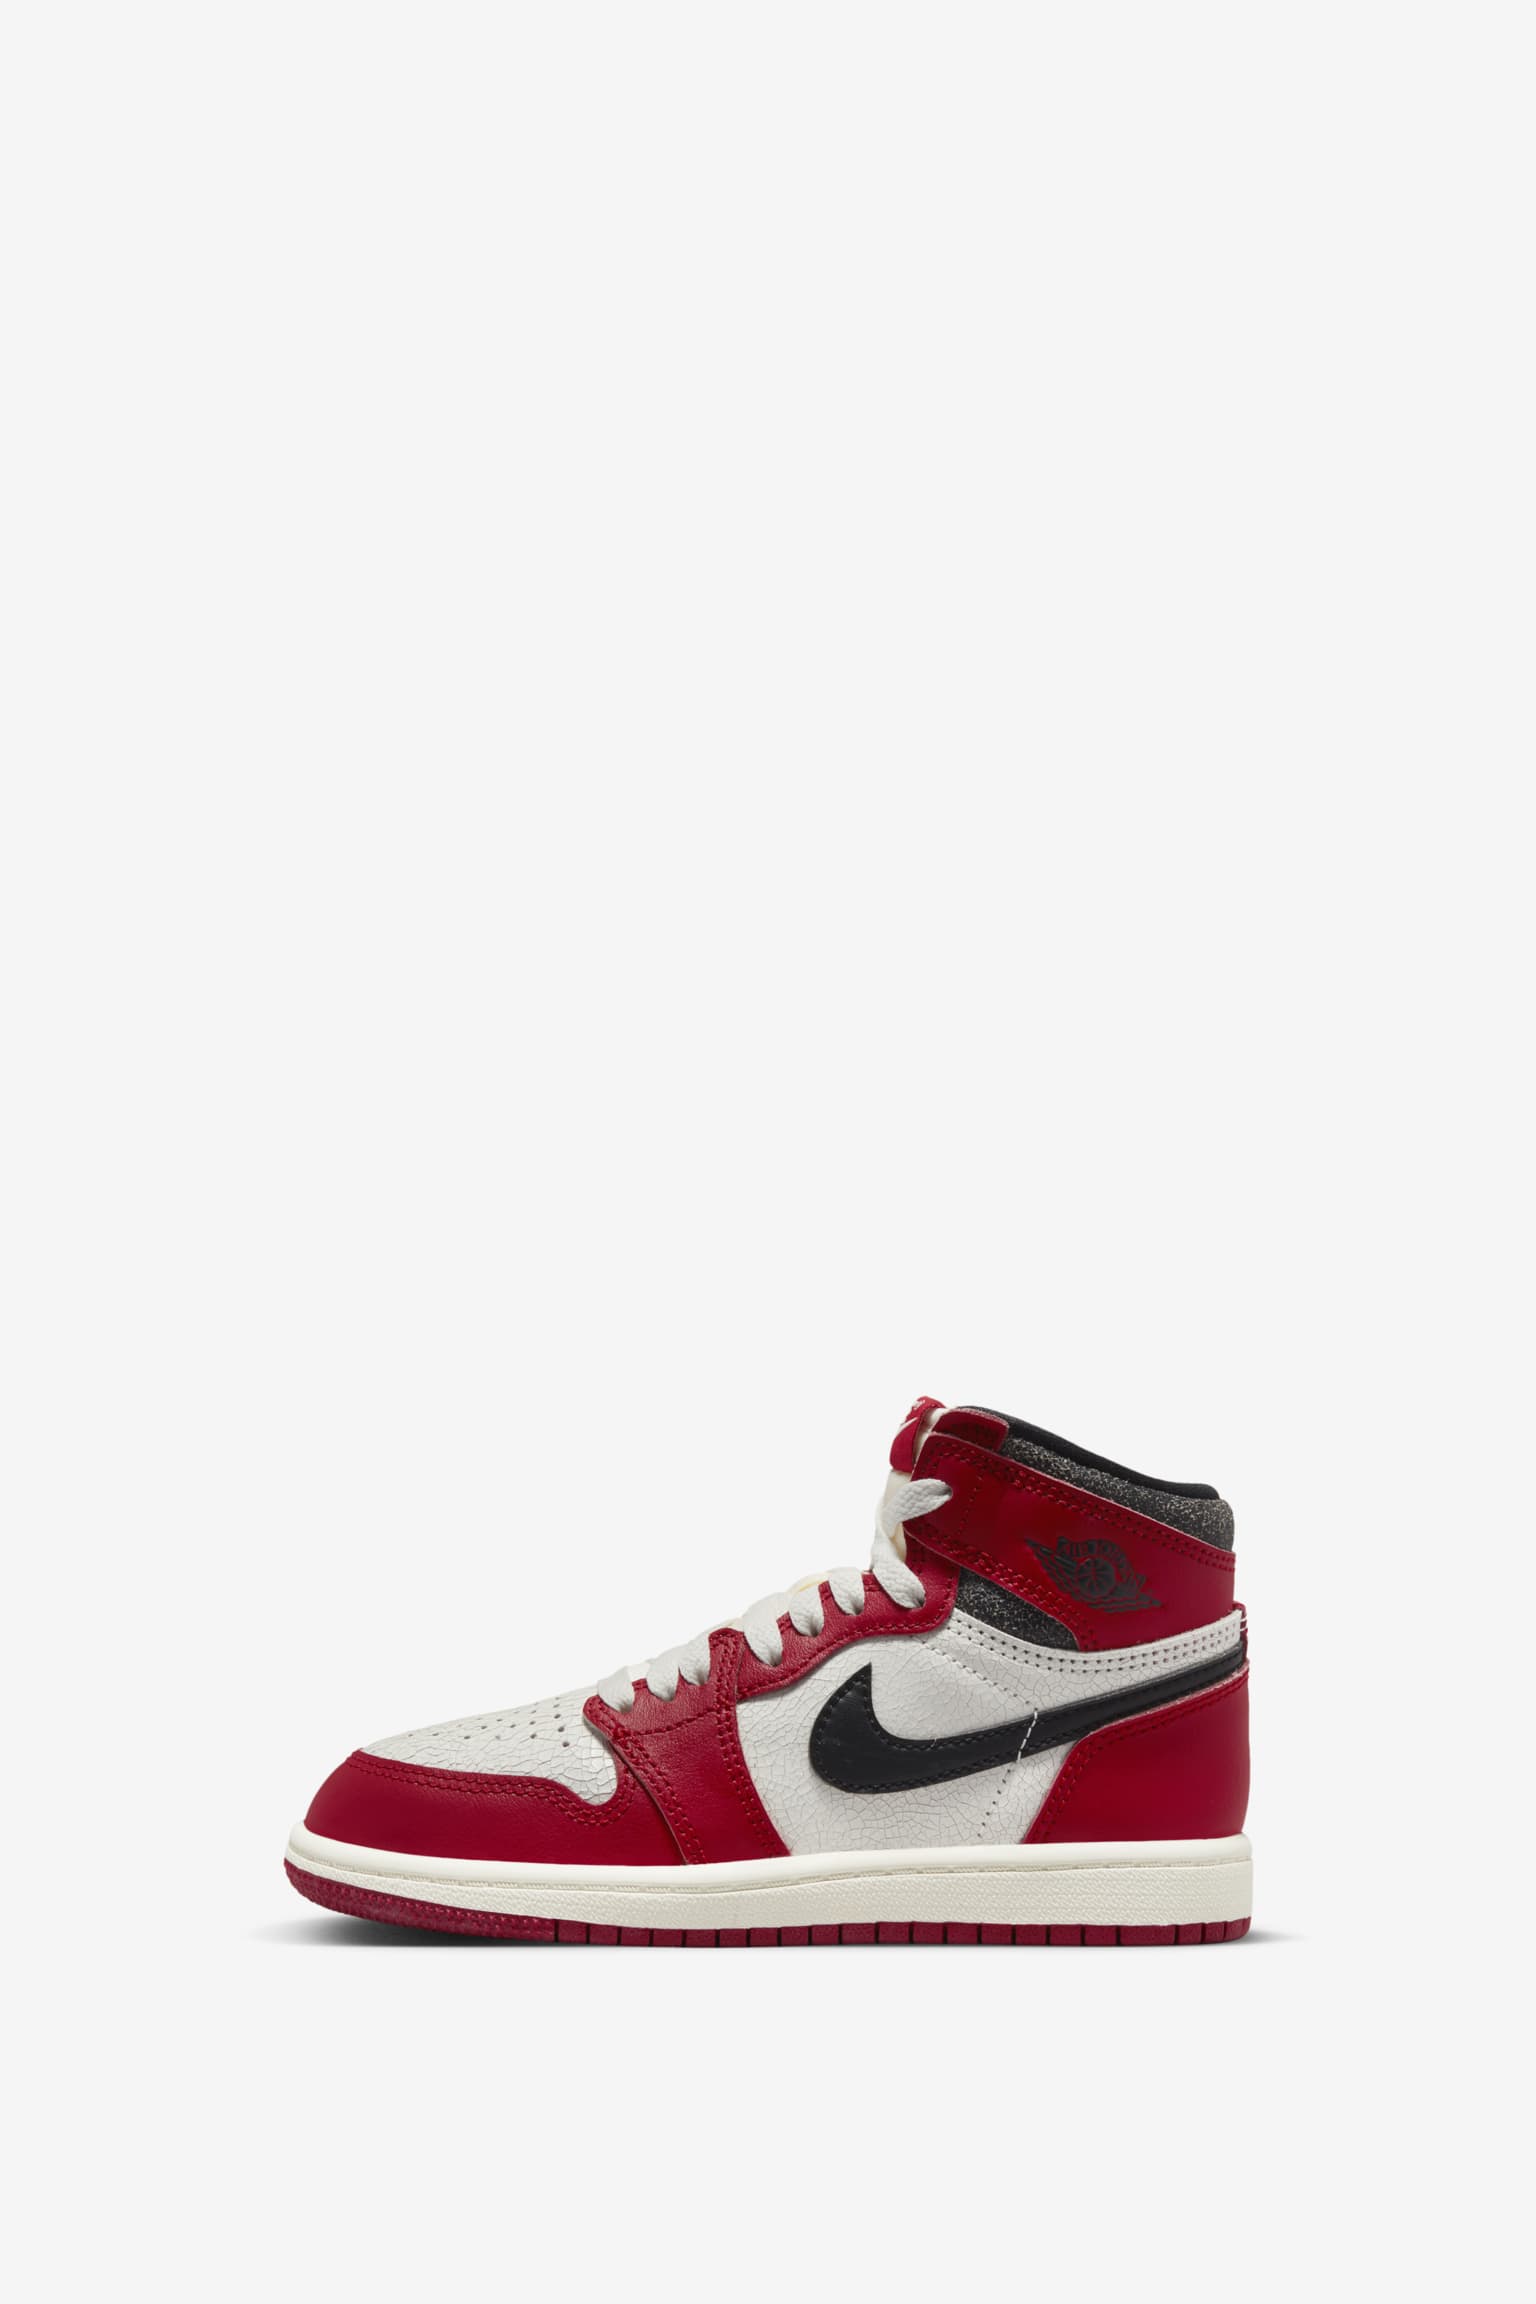 Air Jordan 1 'Chicago' (DZ5485-612) Release Date. Nike SNKRS GB